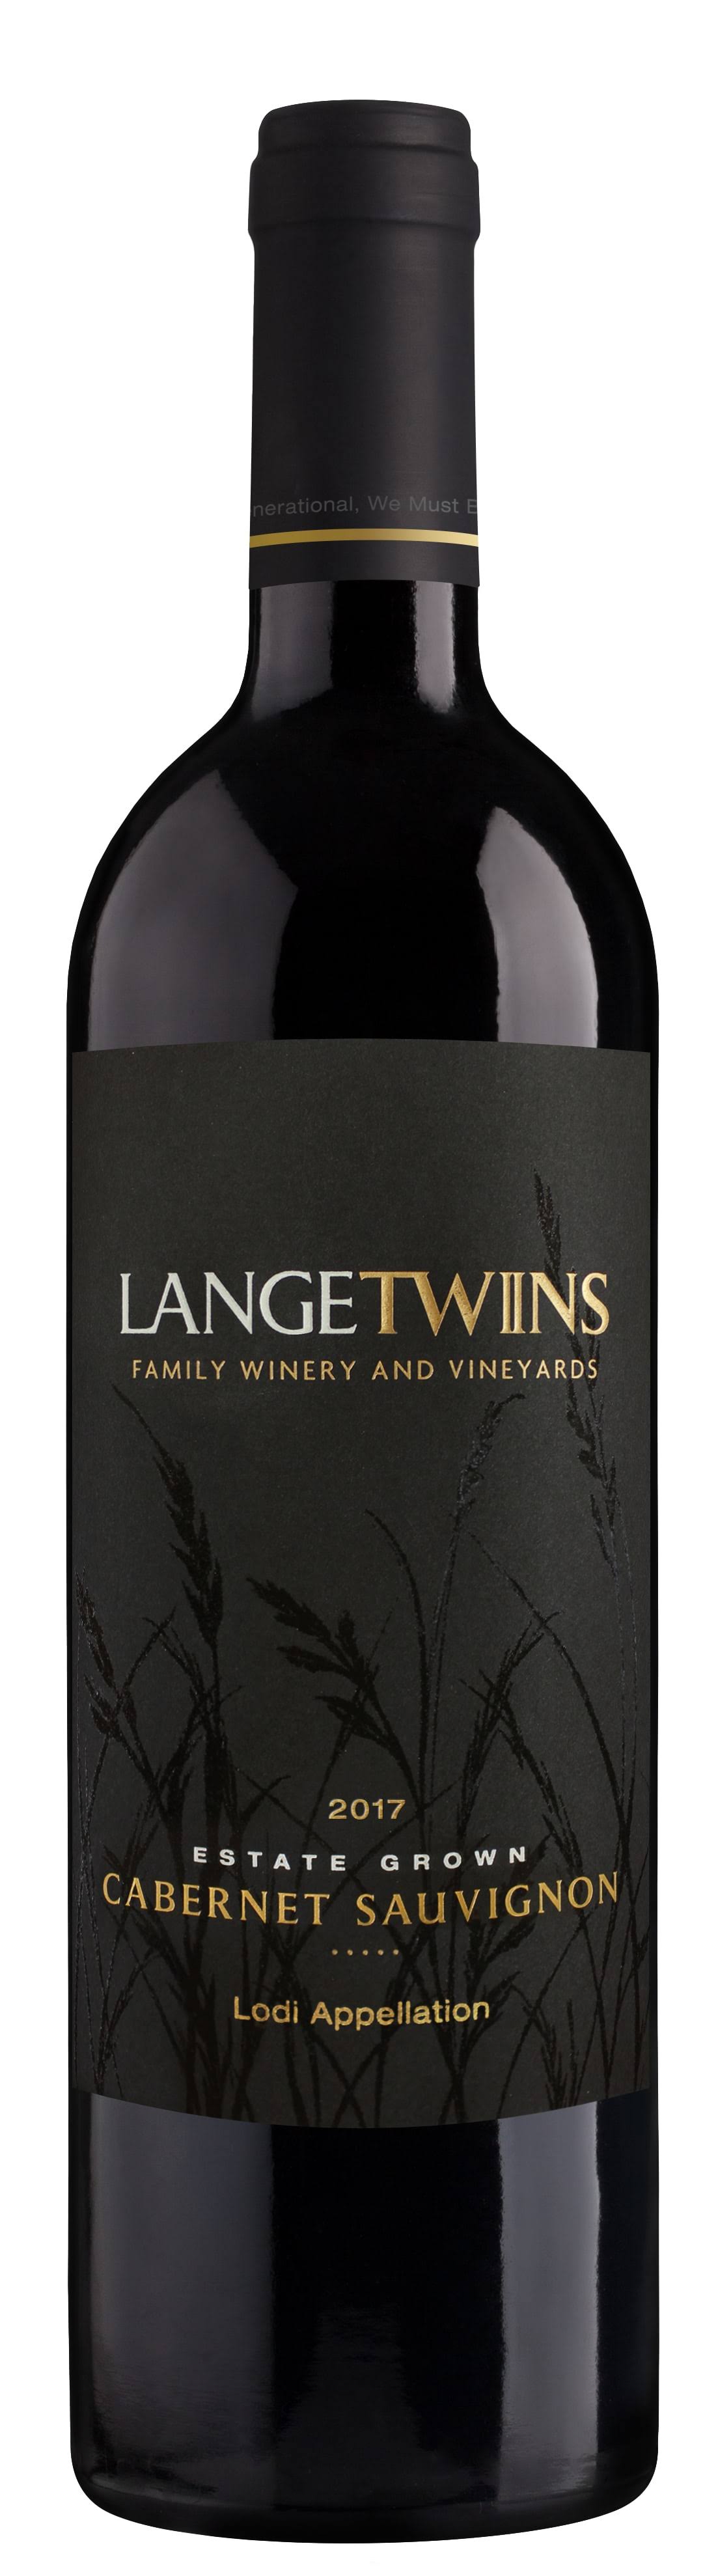 LangeTwins Cabernet Sauvignon, Lodi Appellation, 2014 - 750 ml